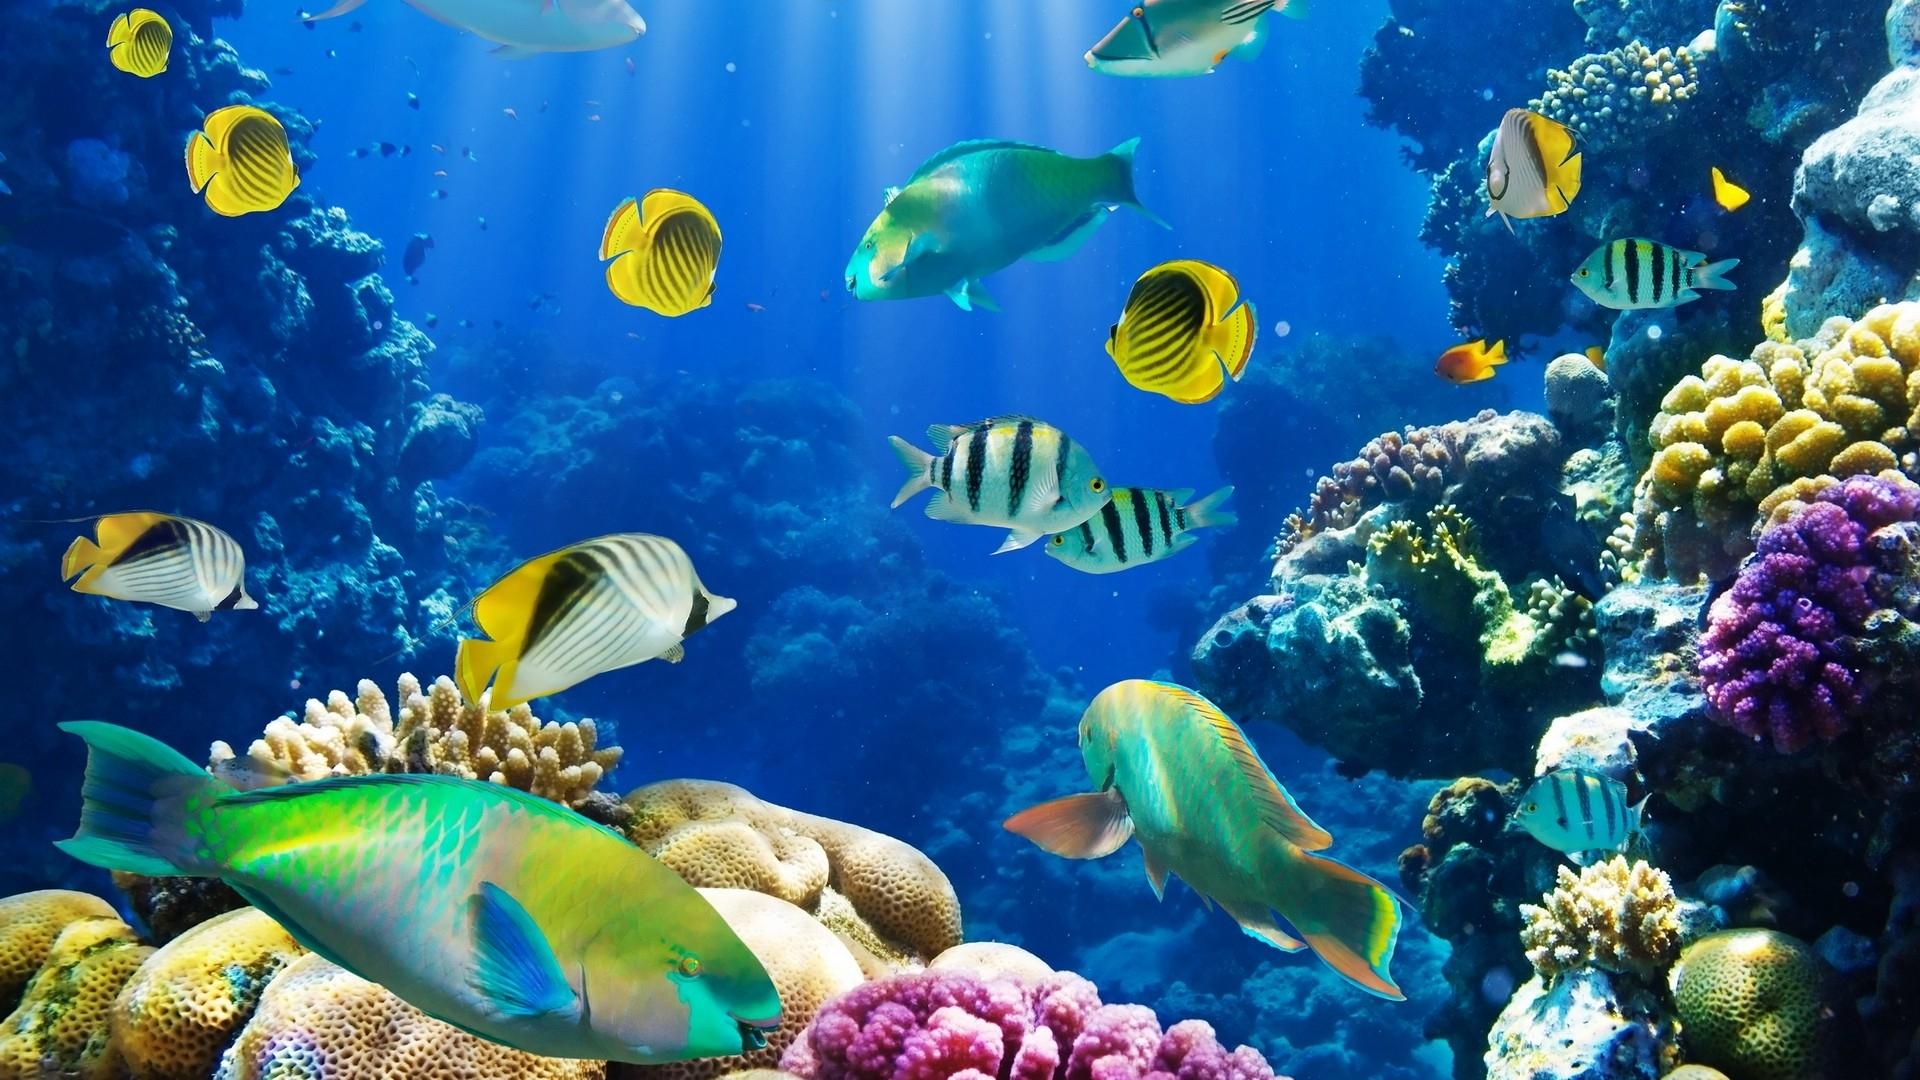 Download Download Sea Life Wallpaper 1080p #RhrBA hdxwallpaperz.com